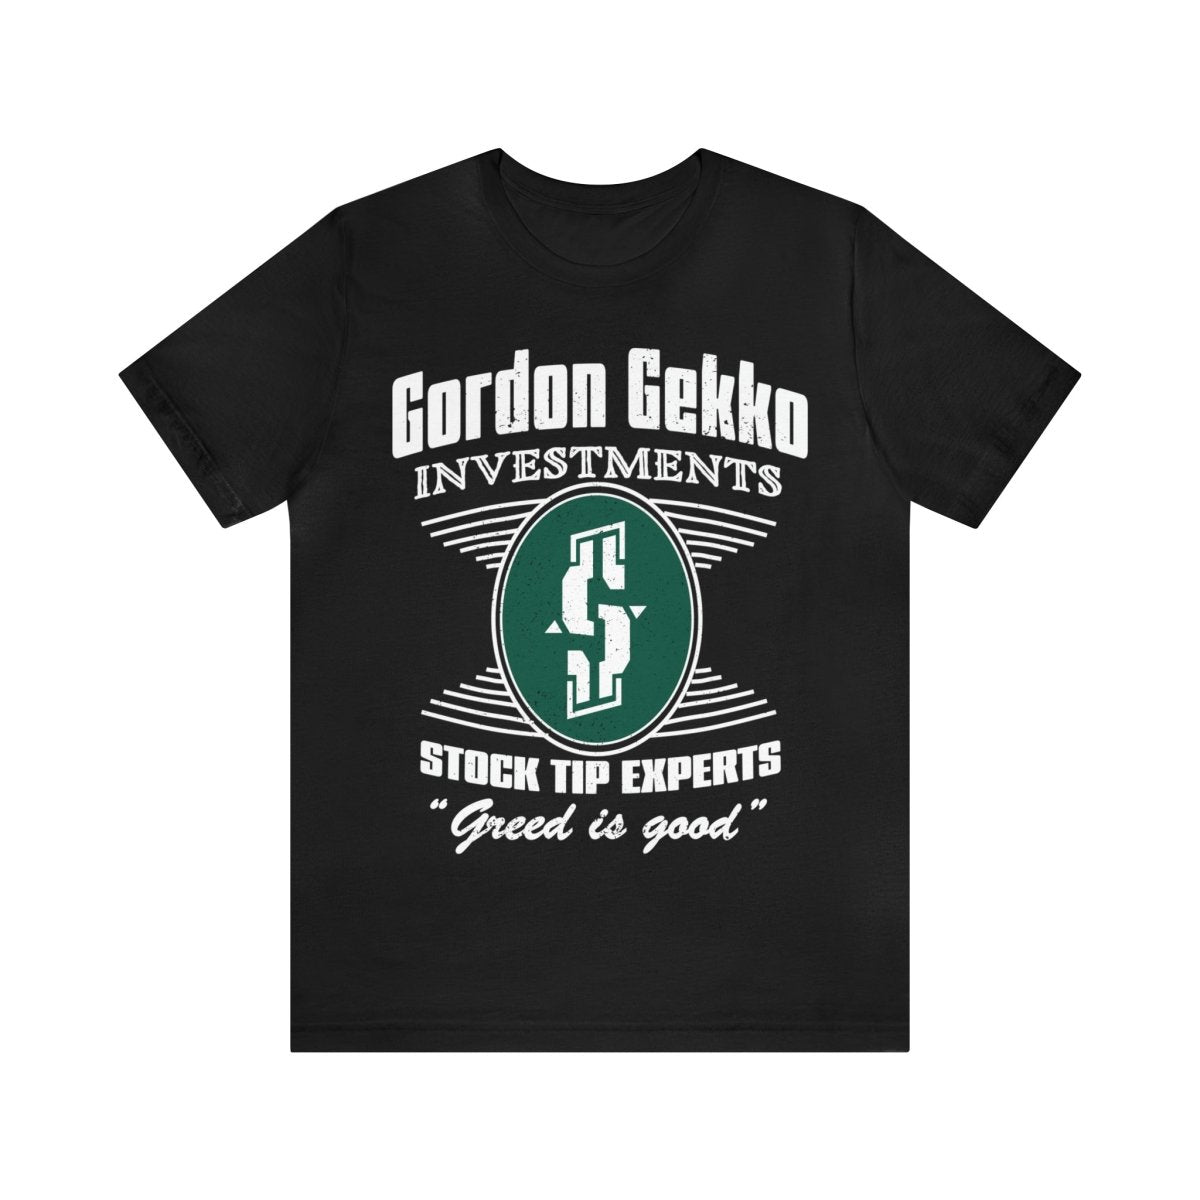 Gordon Gekko Investments Premium T-Shirt, Stock Tip Experts, Greed Is Good